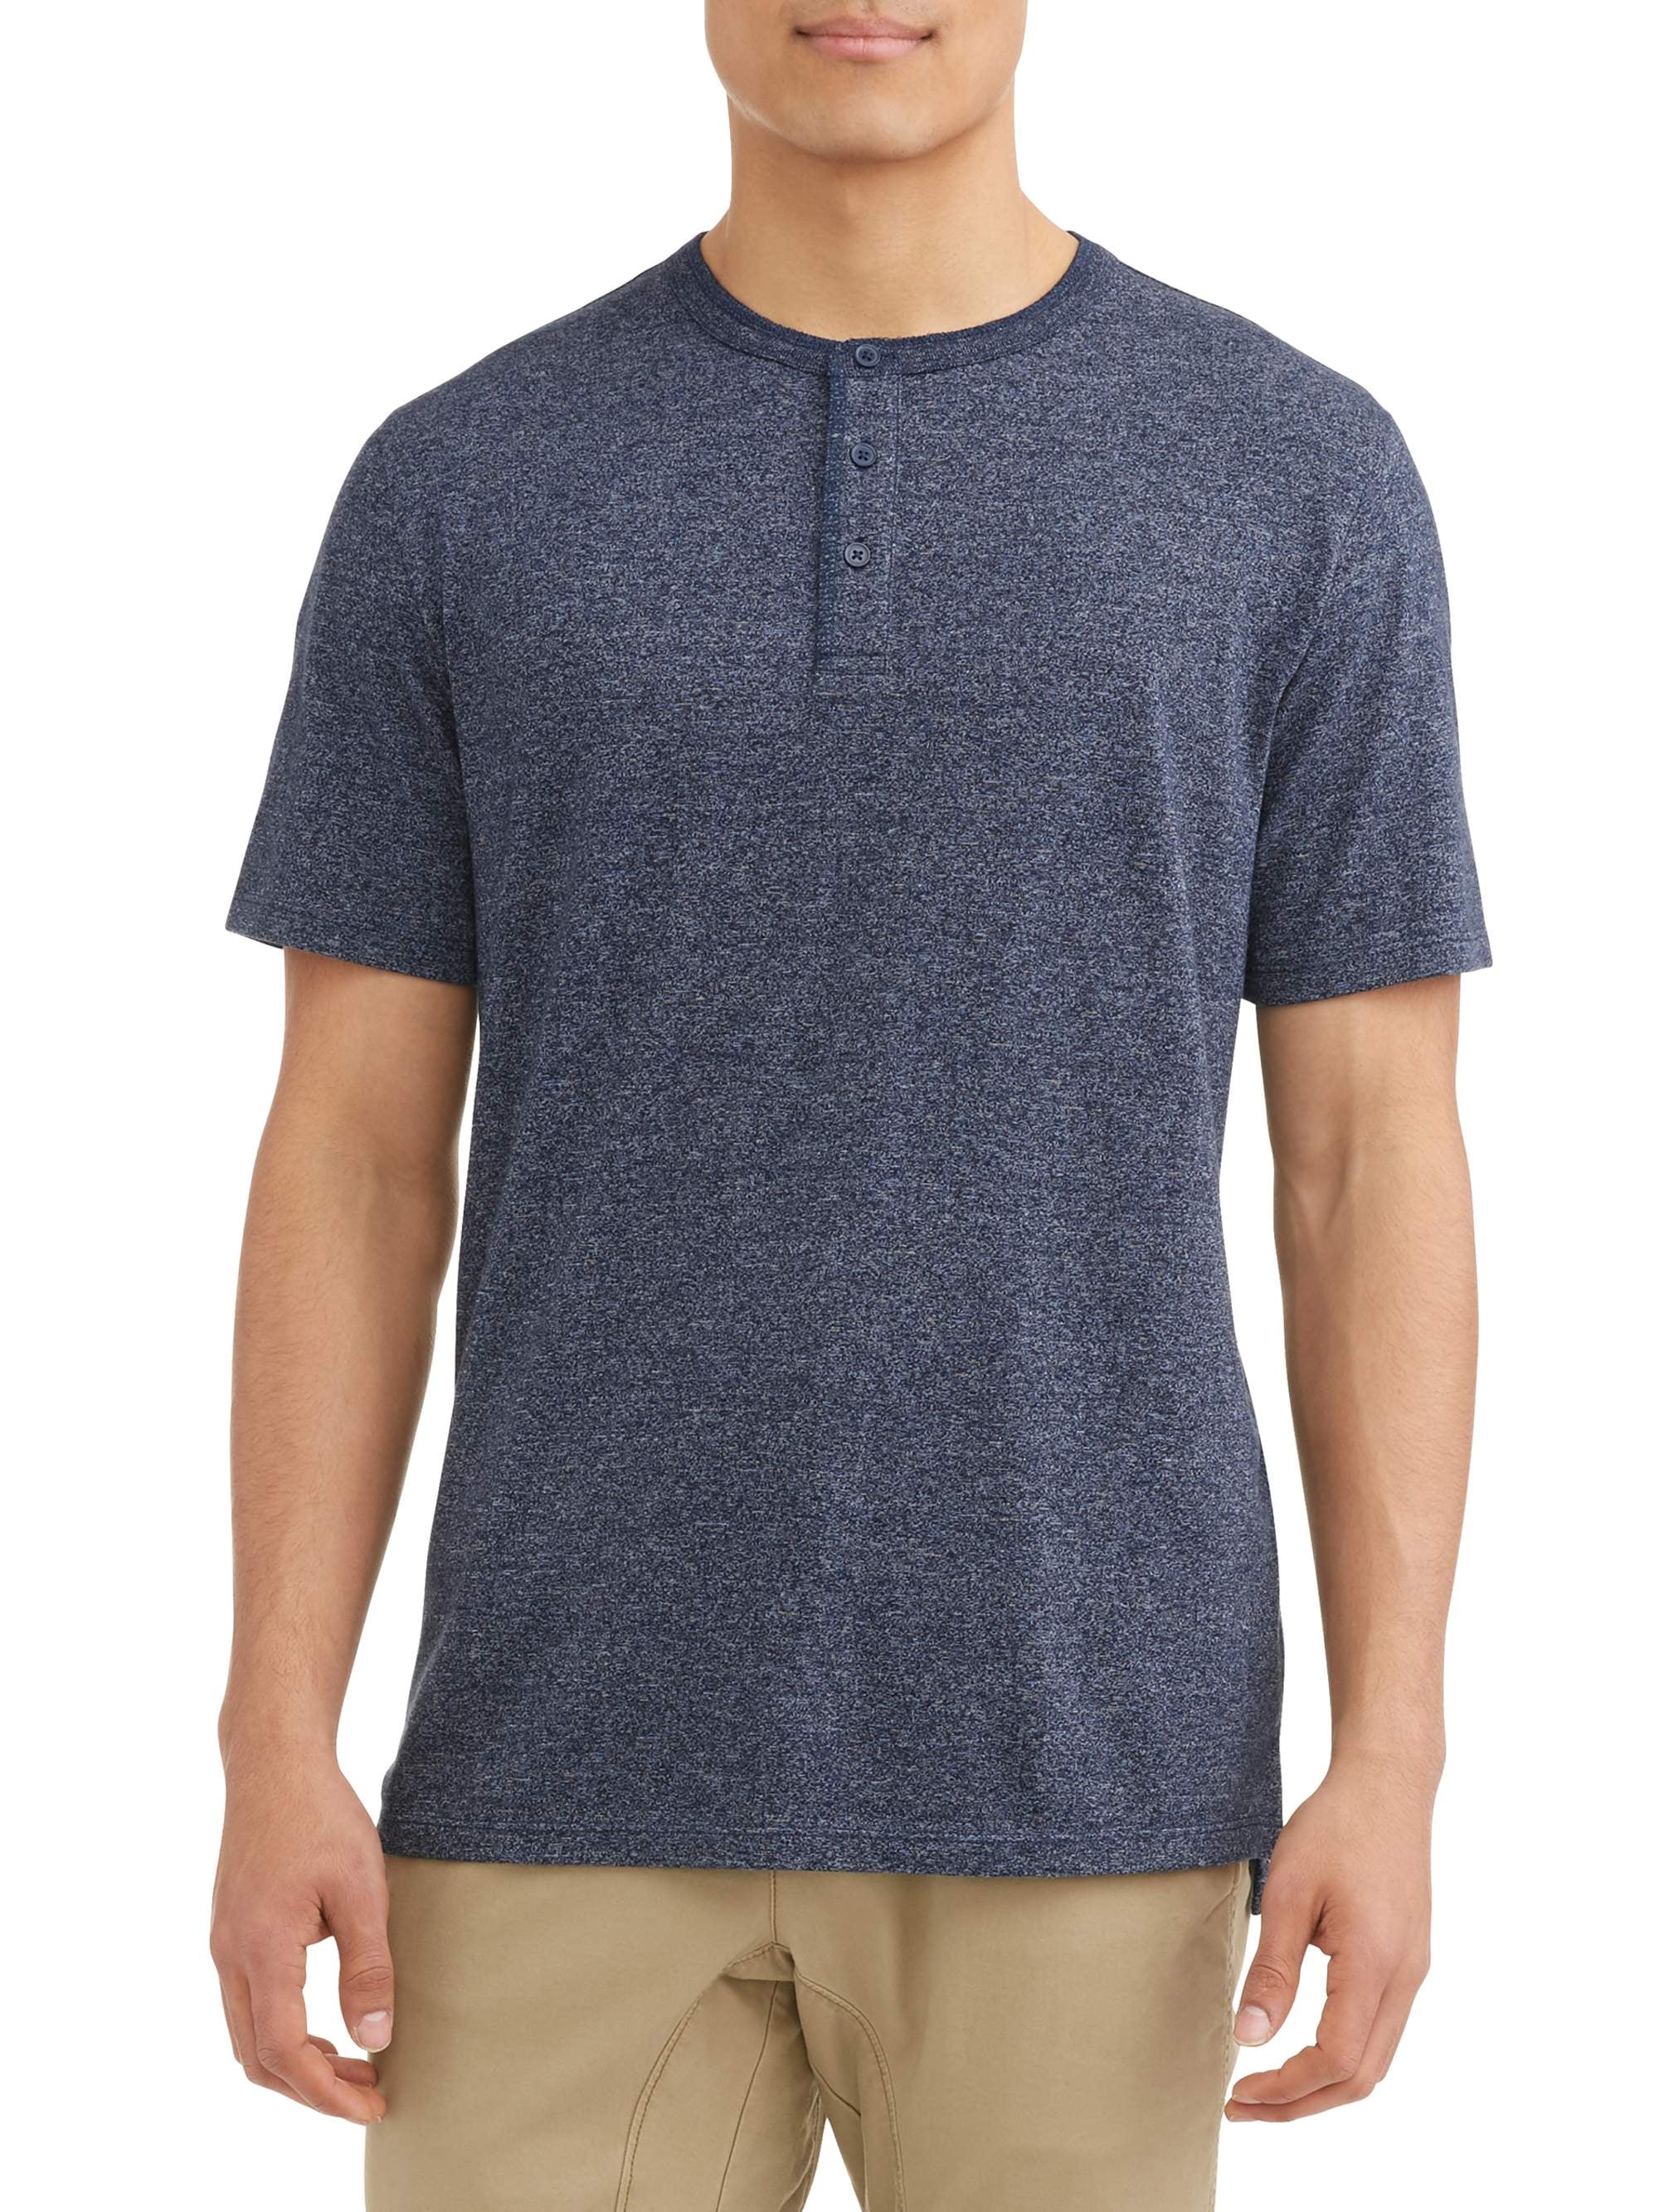 GEORGE - George Men's Short Sleeve Fashion Henley T-Shirt - Walmart.com ...